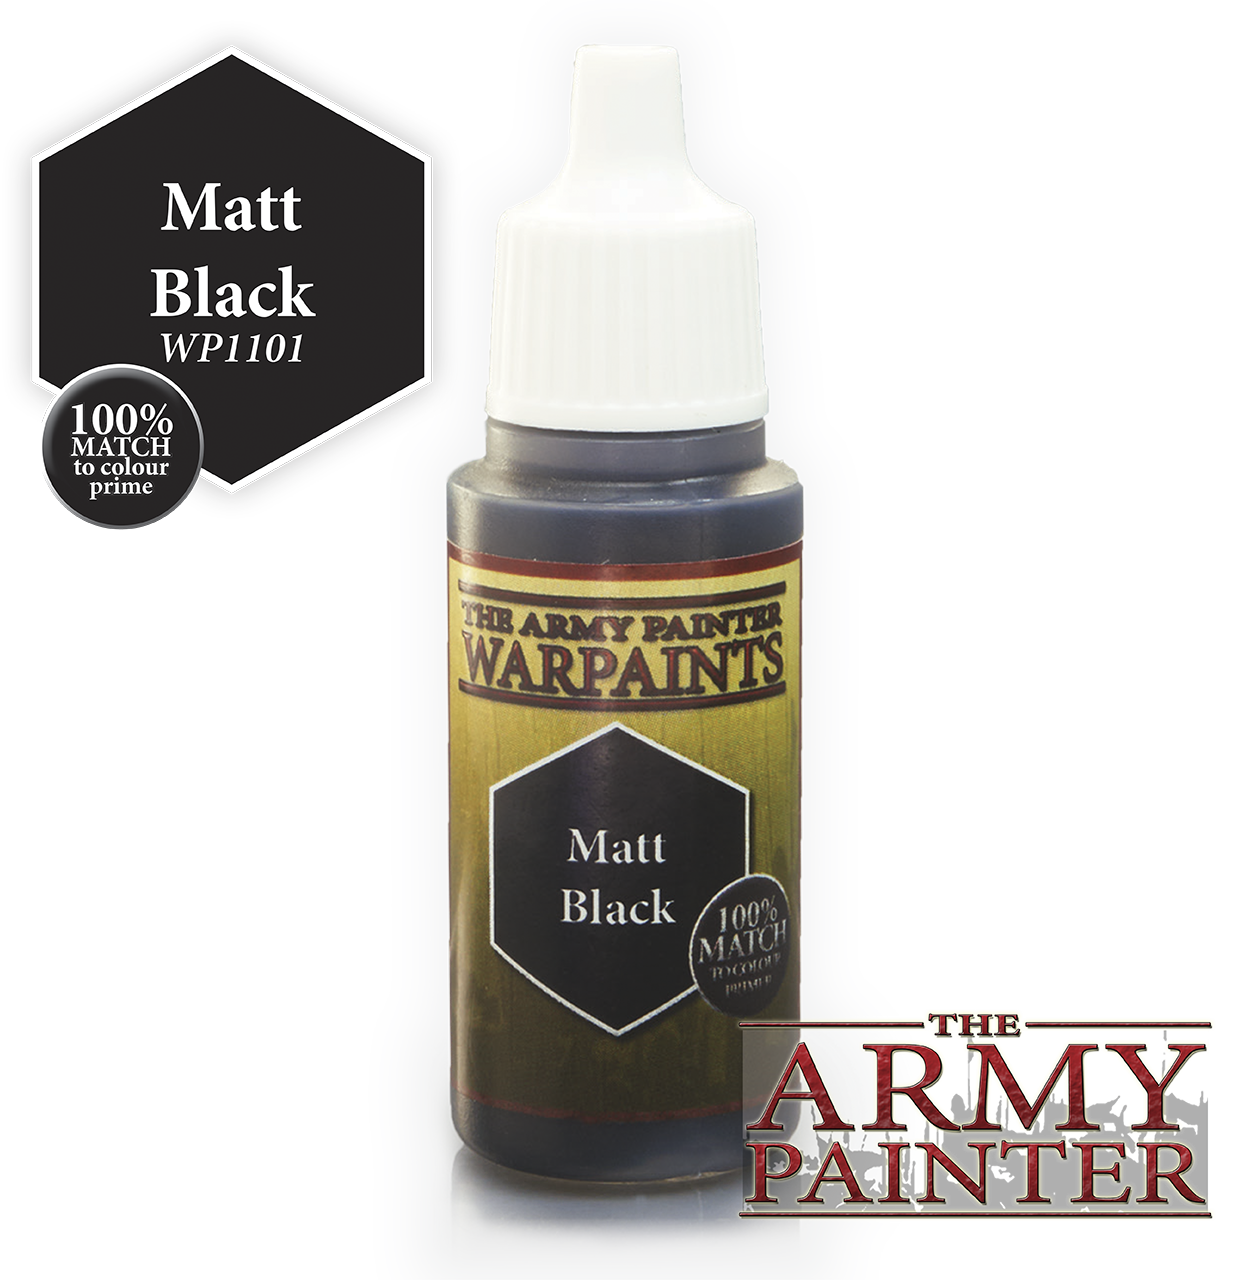 The ARMY PAINTER: Acrylics Warpaint - Matt Black | Tacoma Games